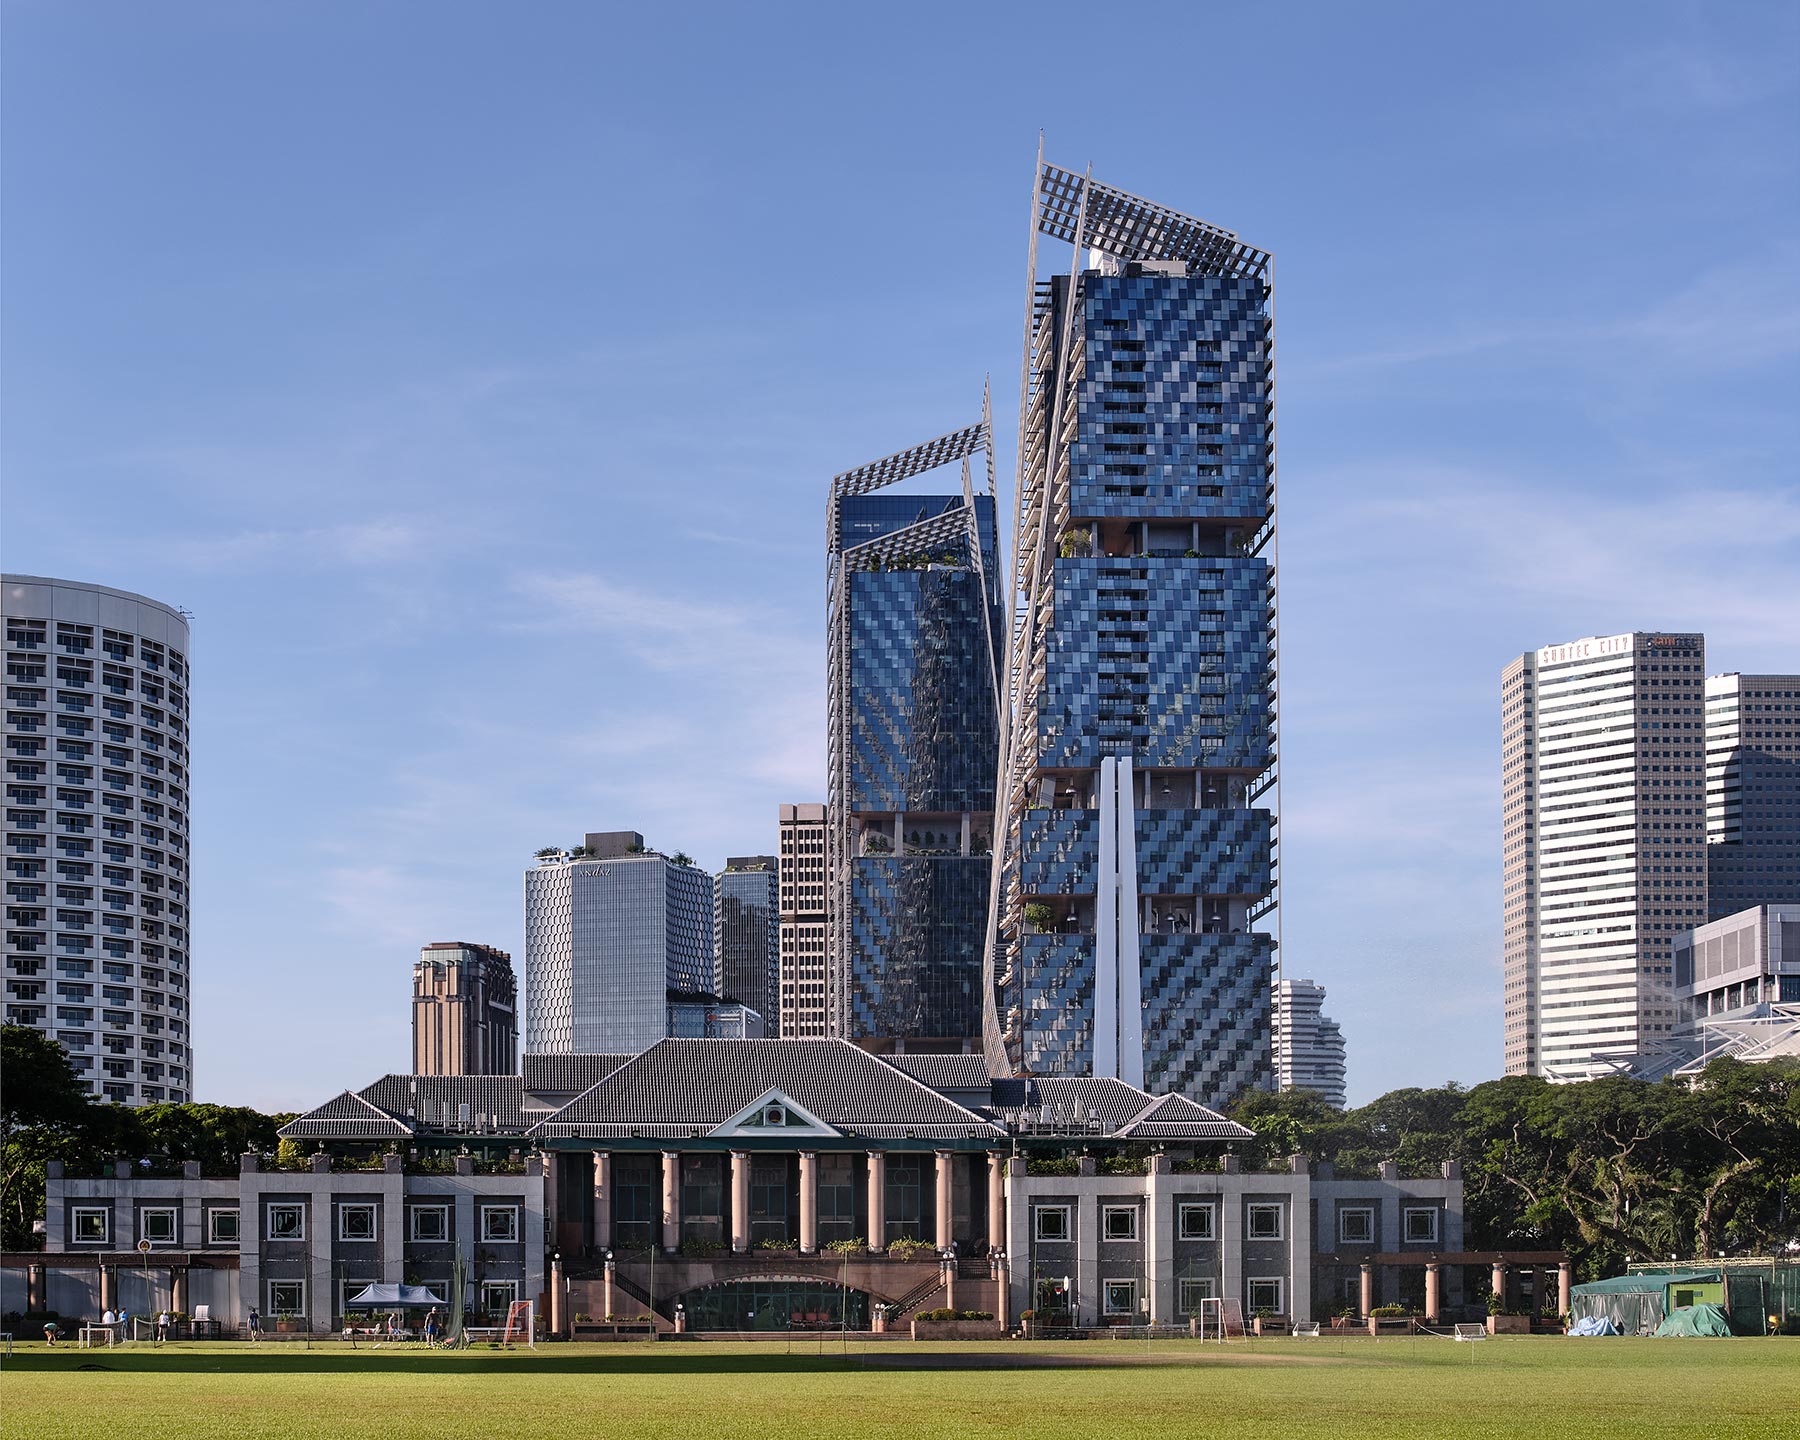 South Beach Tower, Singapore. Owen Raggett, architectural photographer, Asia